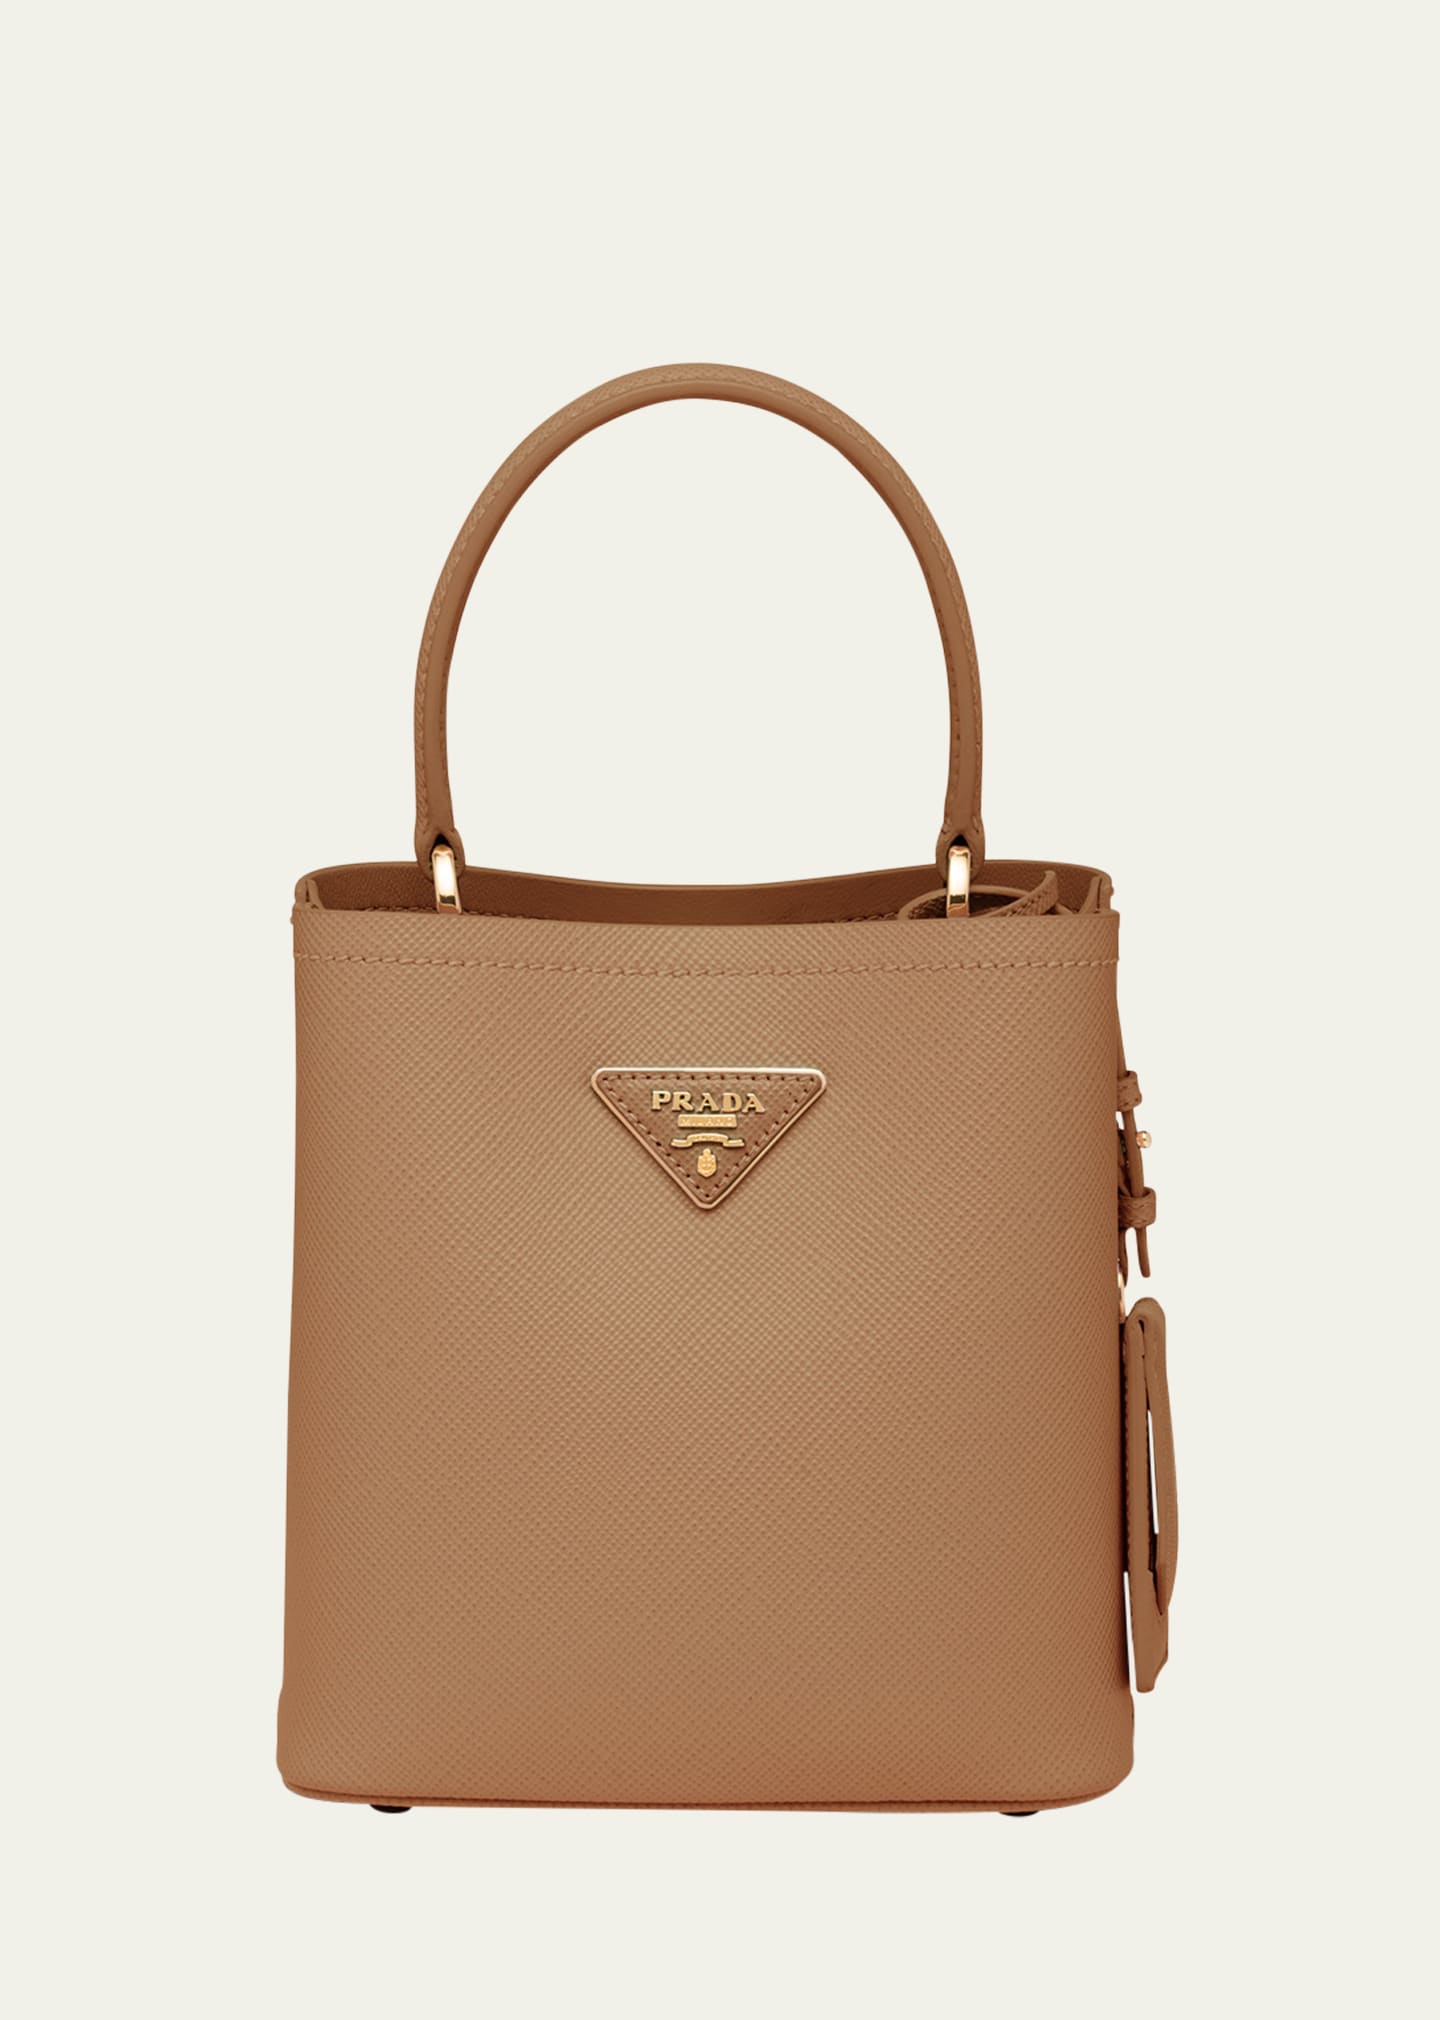 High Quality Leather Women Shoulder Bag 20210 Luxury Handbags